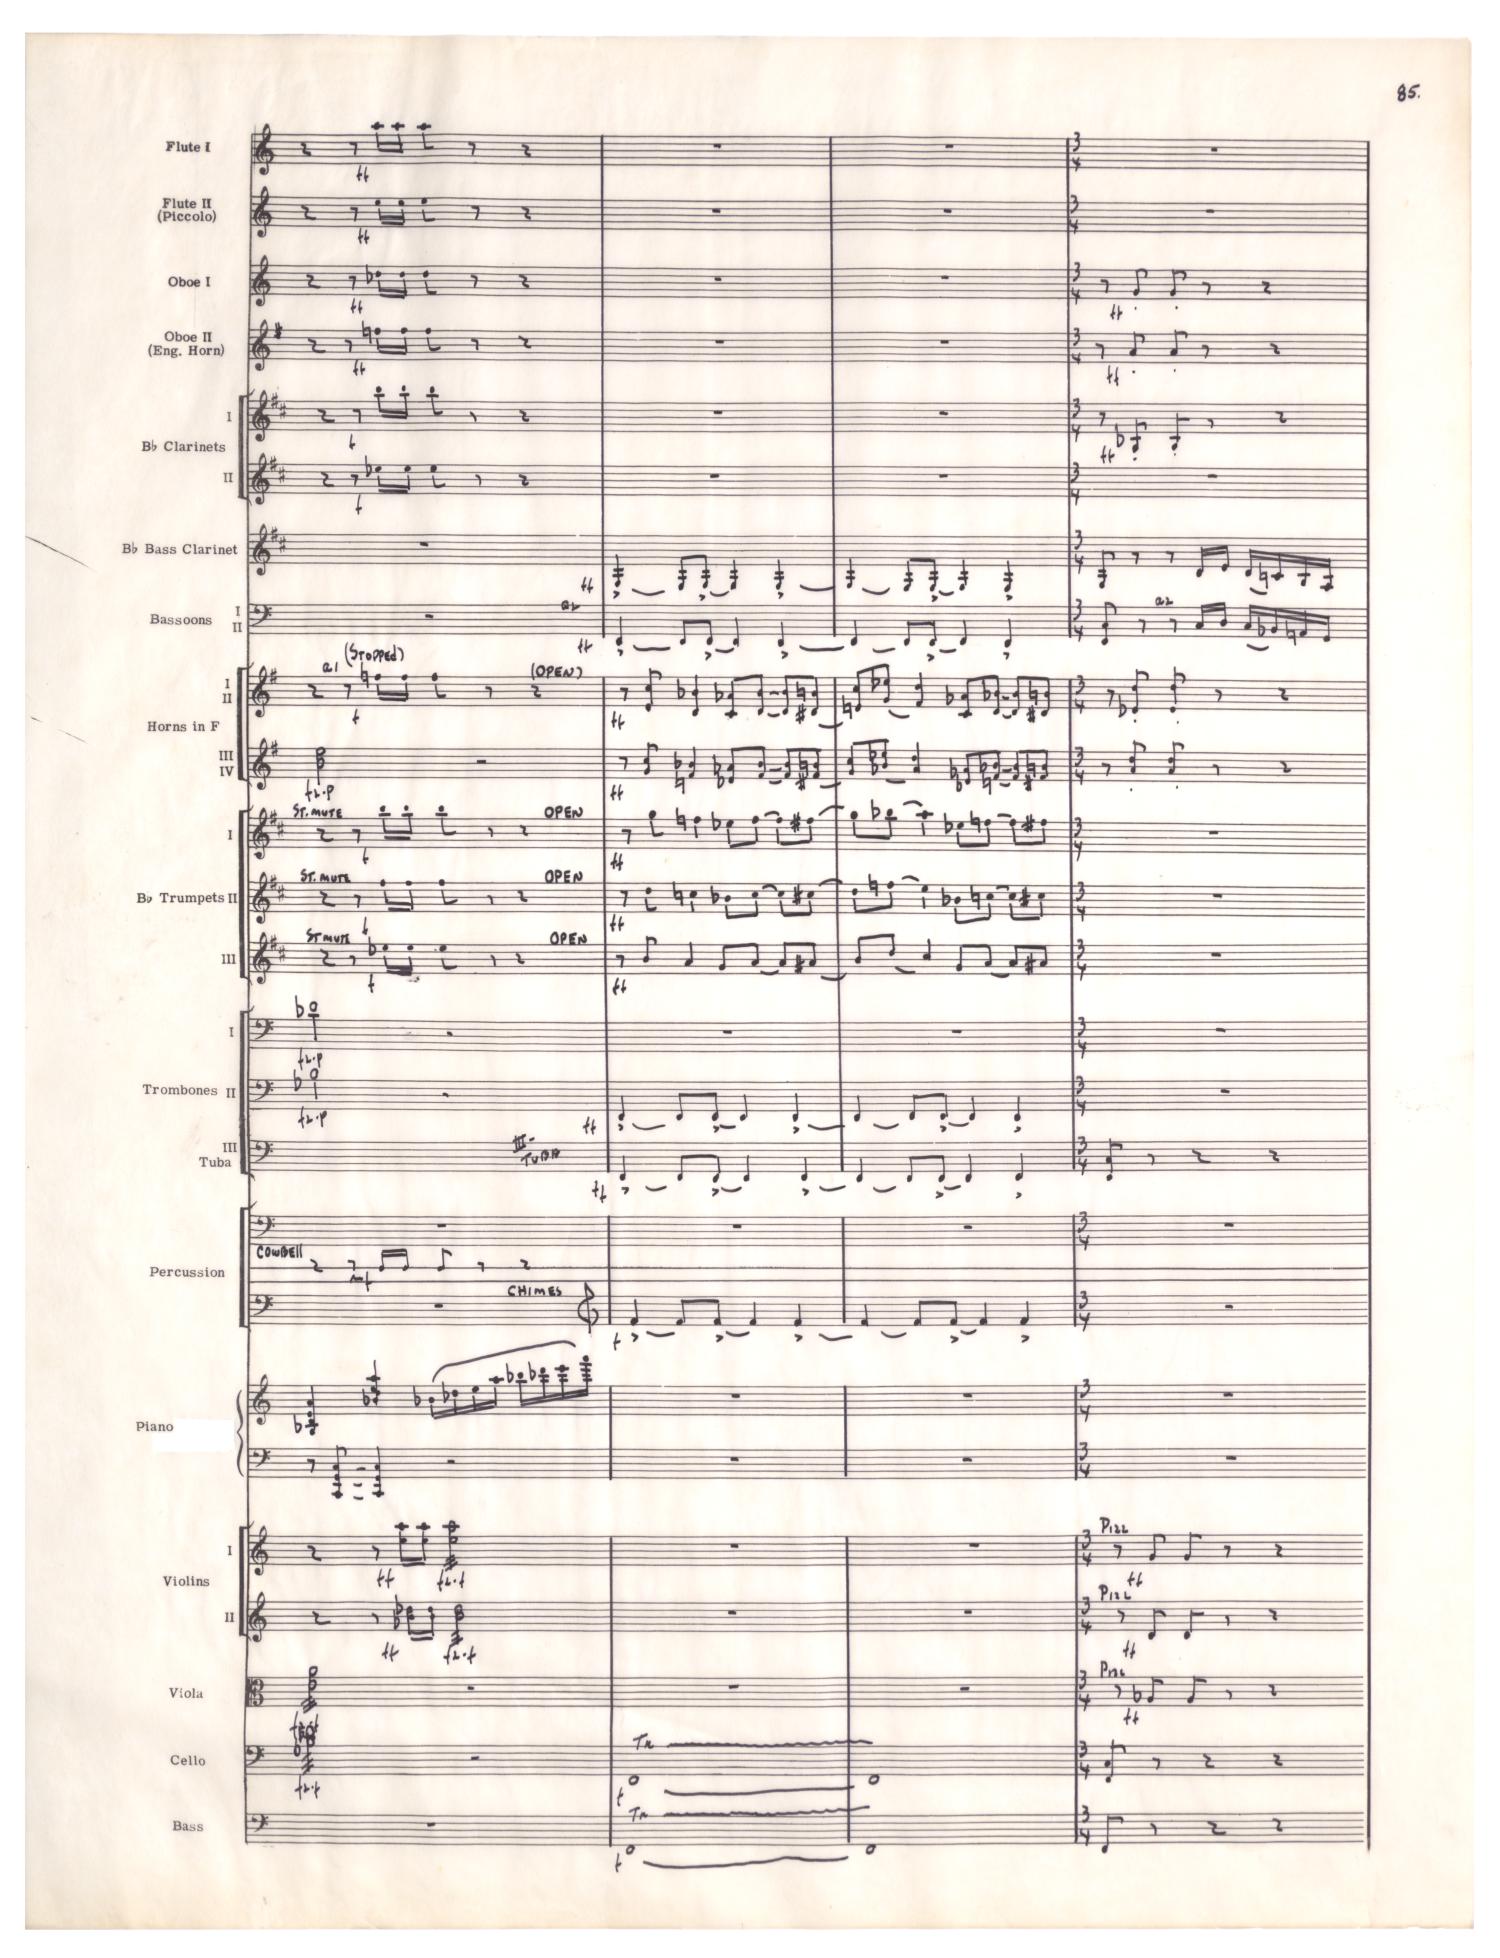 The encore concerto for piano and orchestra
                                                
                                                    85
                                                